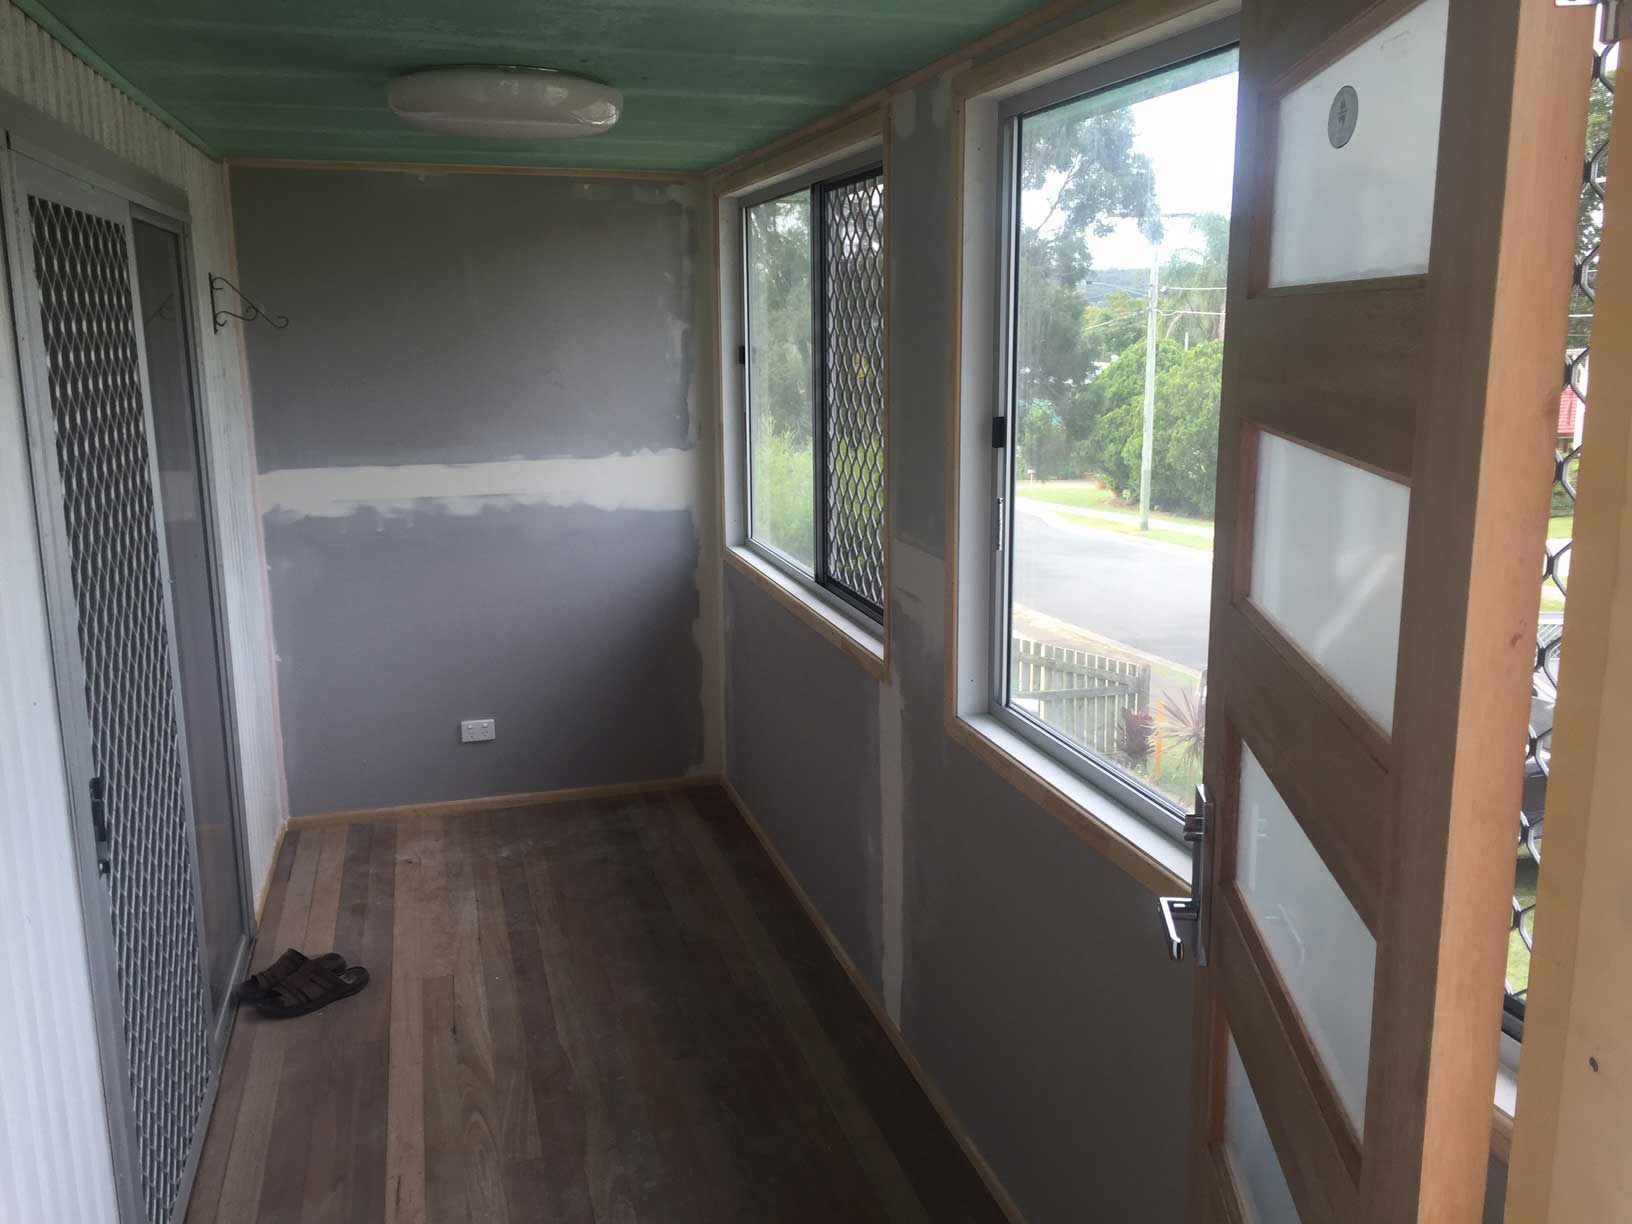 new verandah give more space